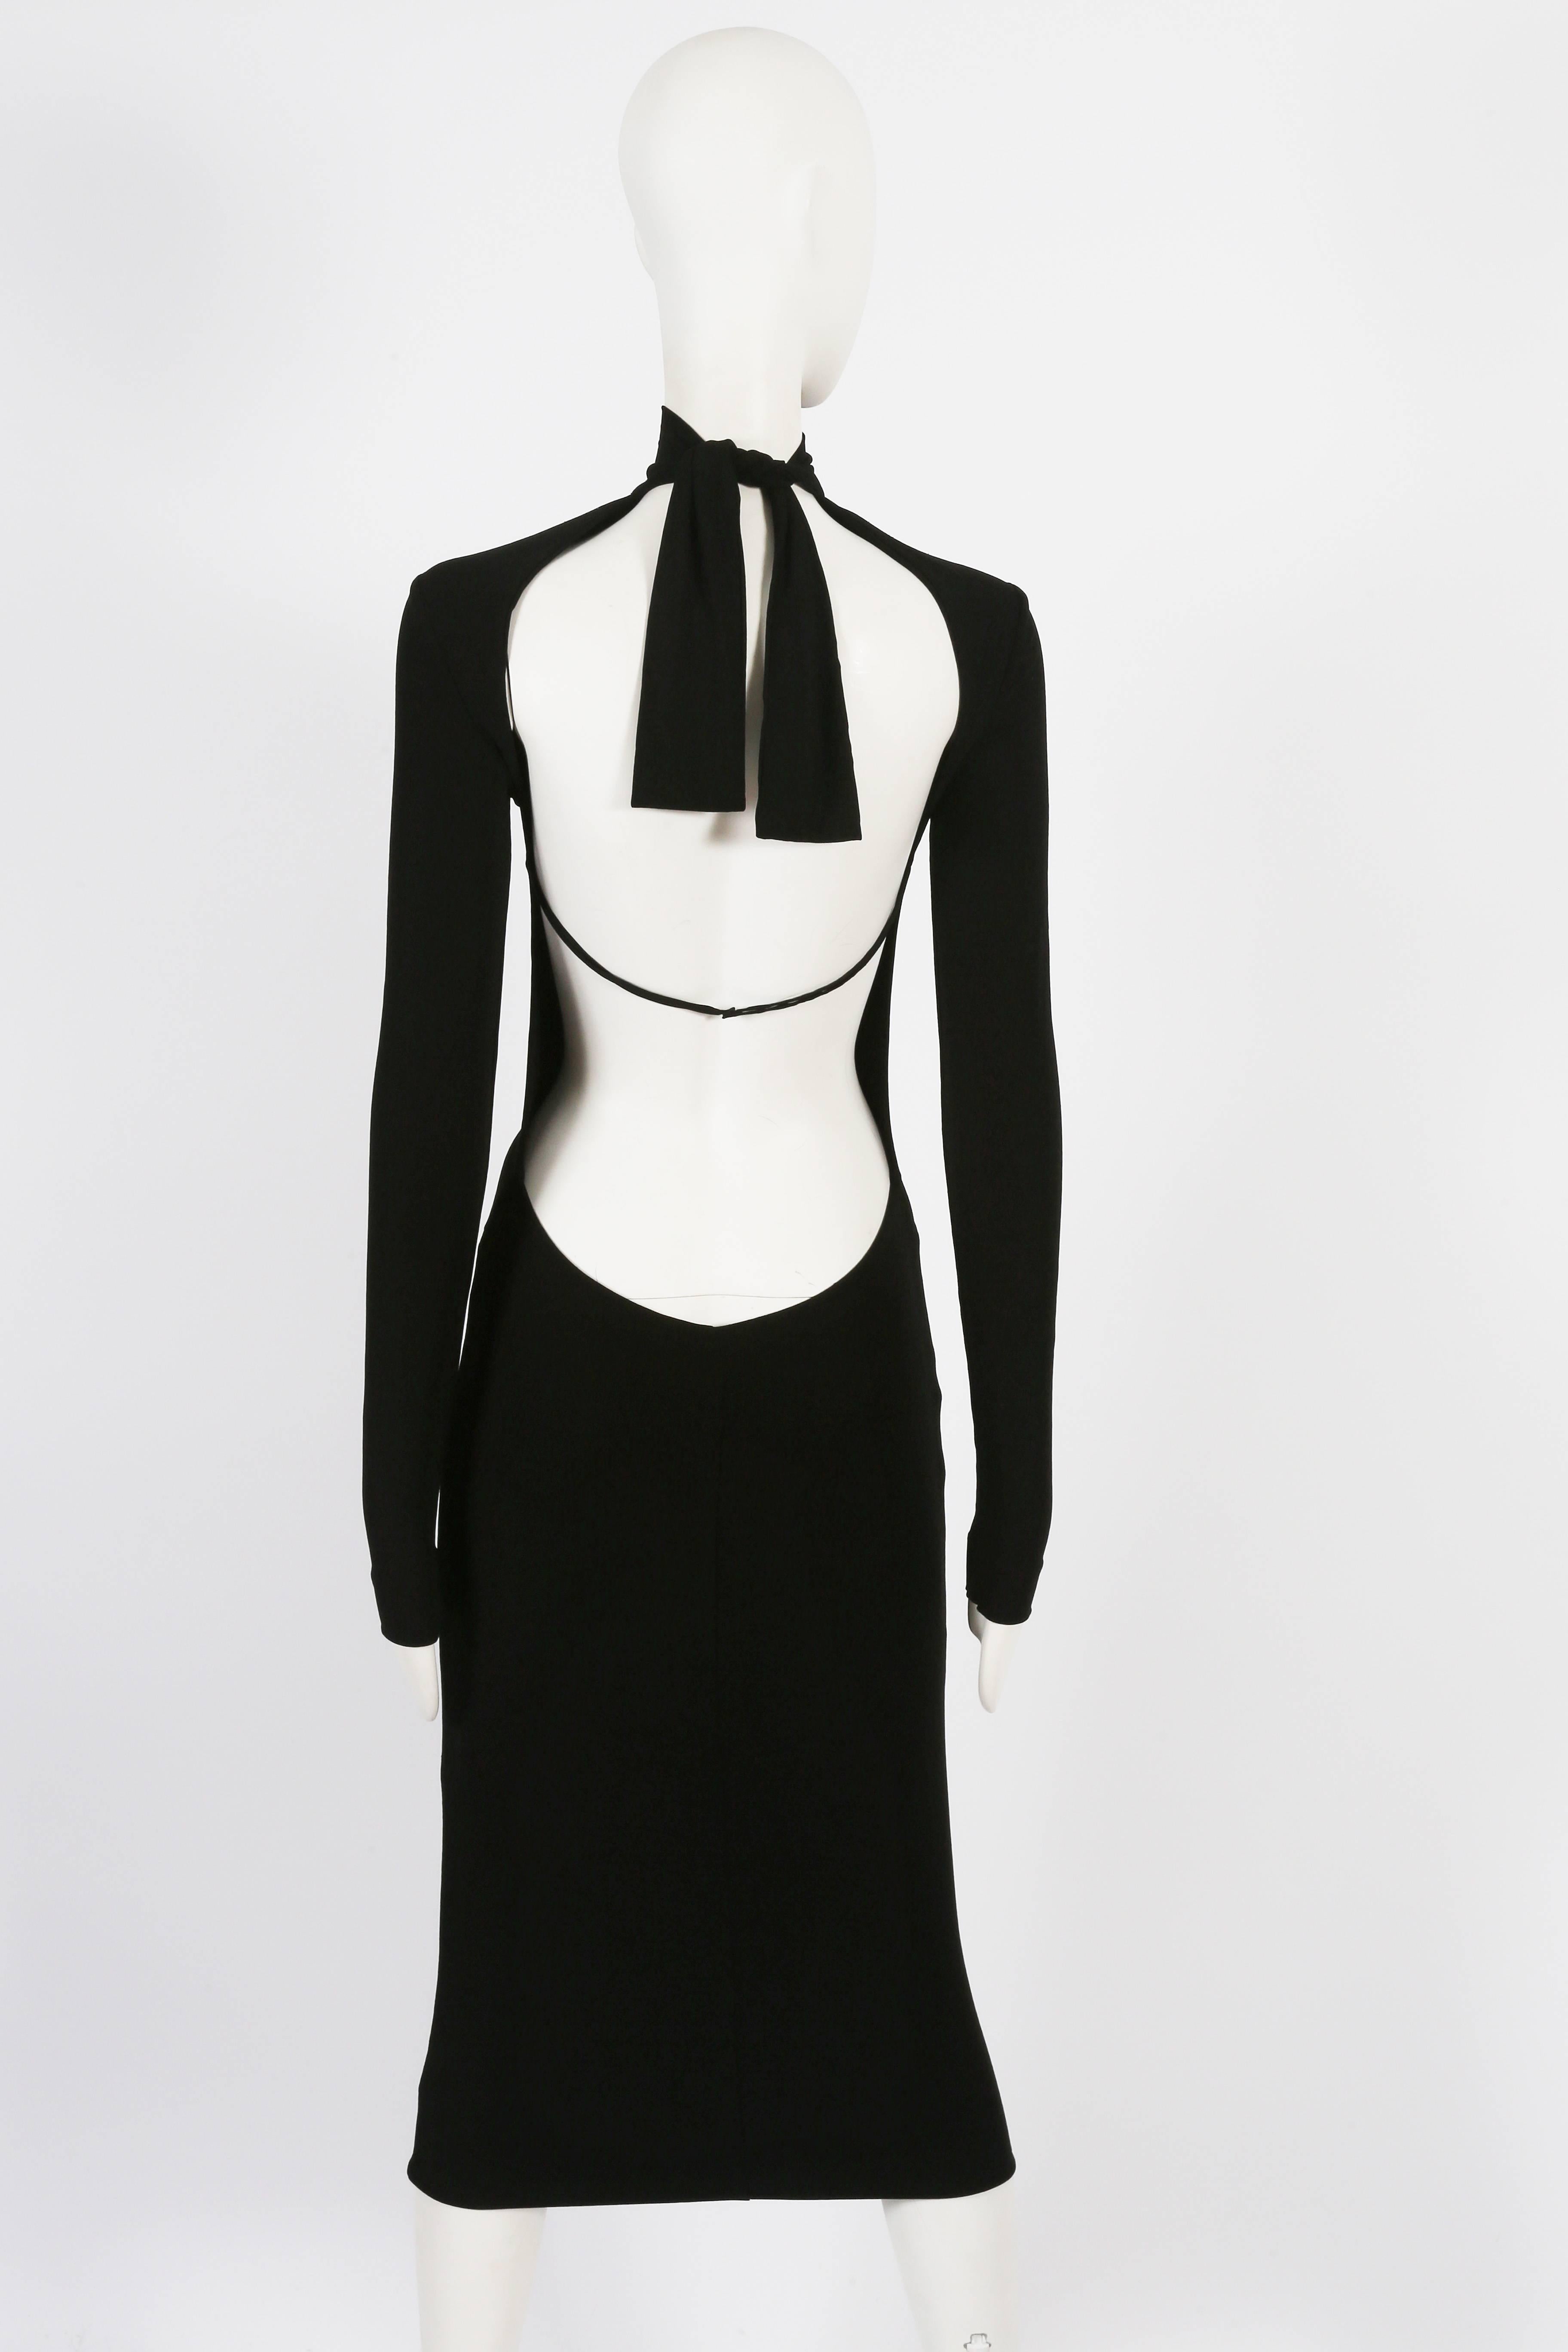 Dolce & Gabbana black bodycon low back dress, circa 1990s